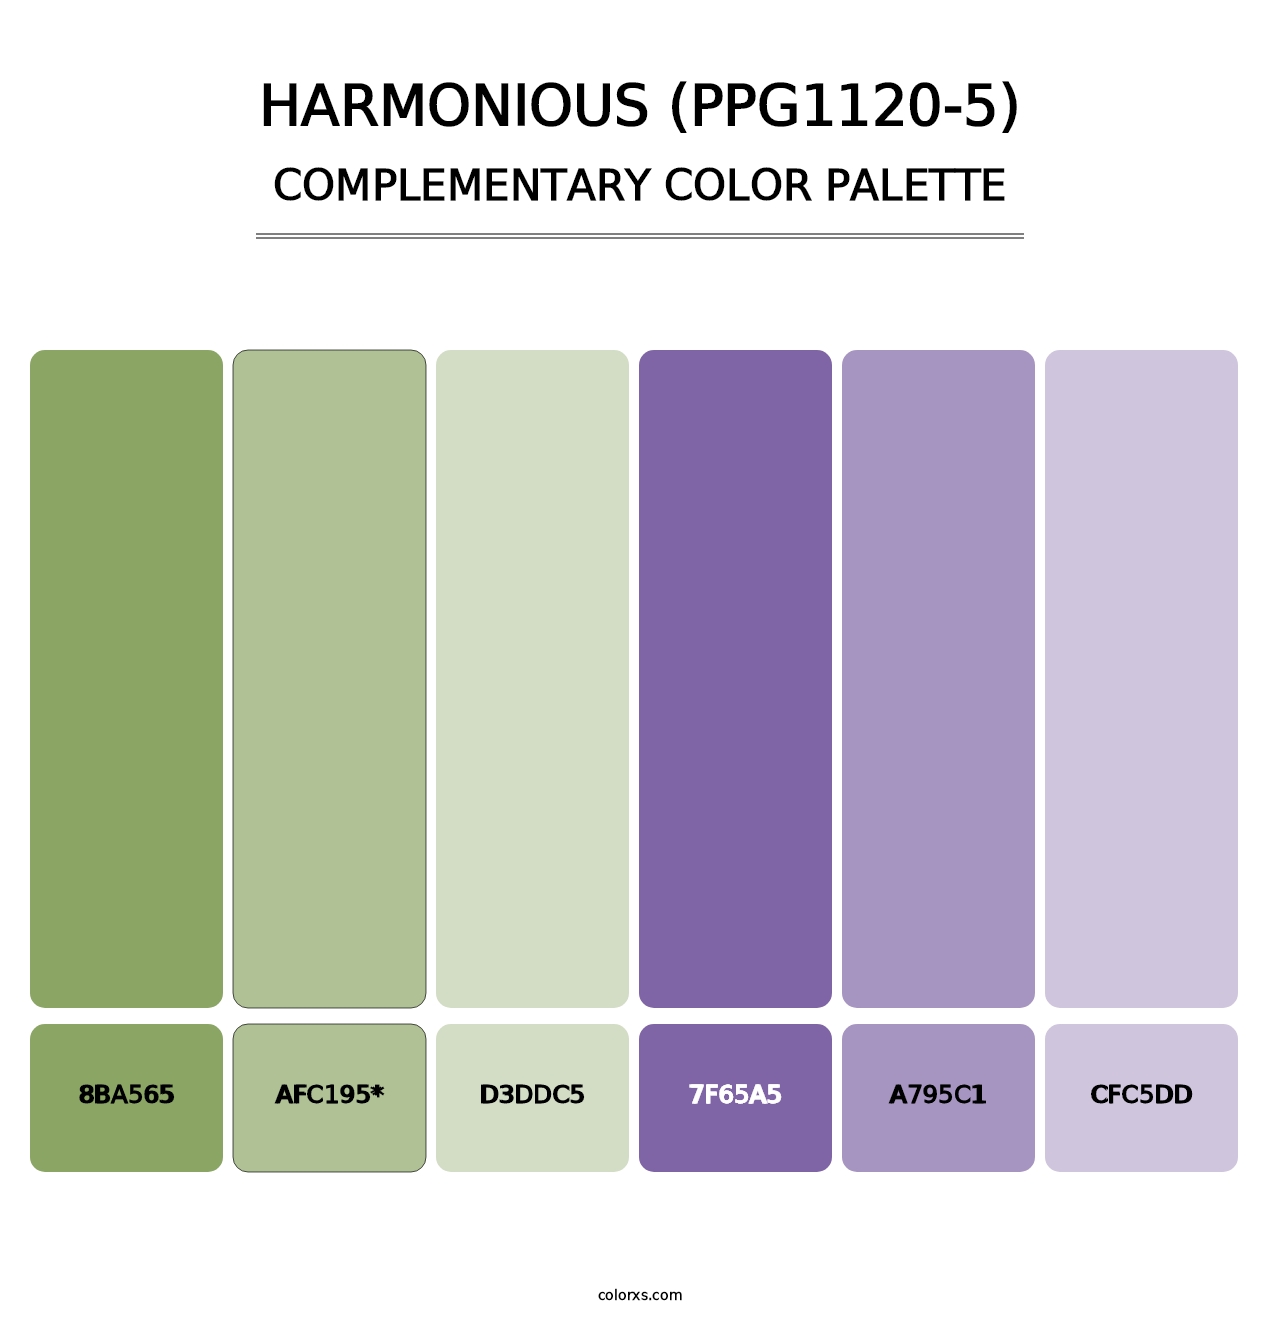 Harmonious (PPG1120-5) - Complementary Color Palette